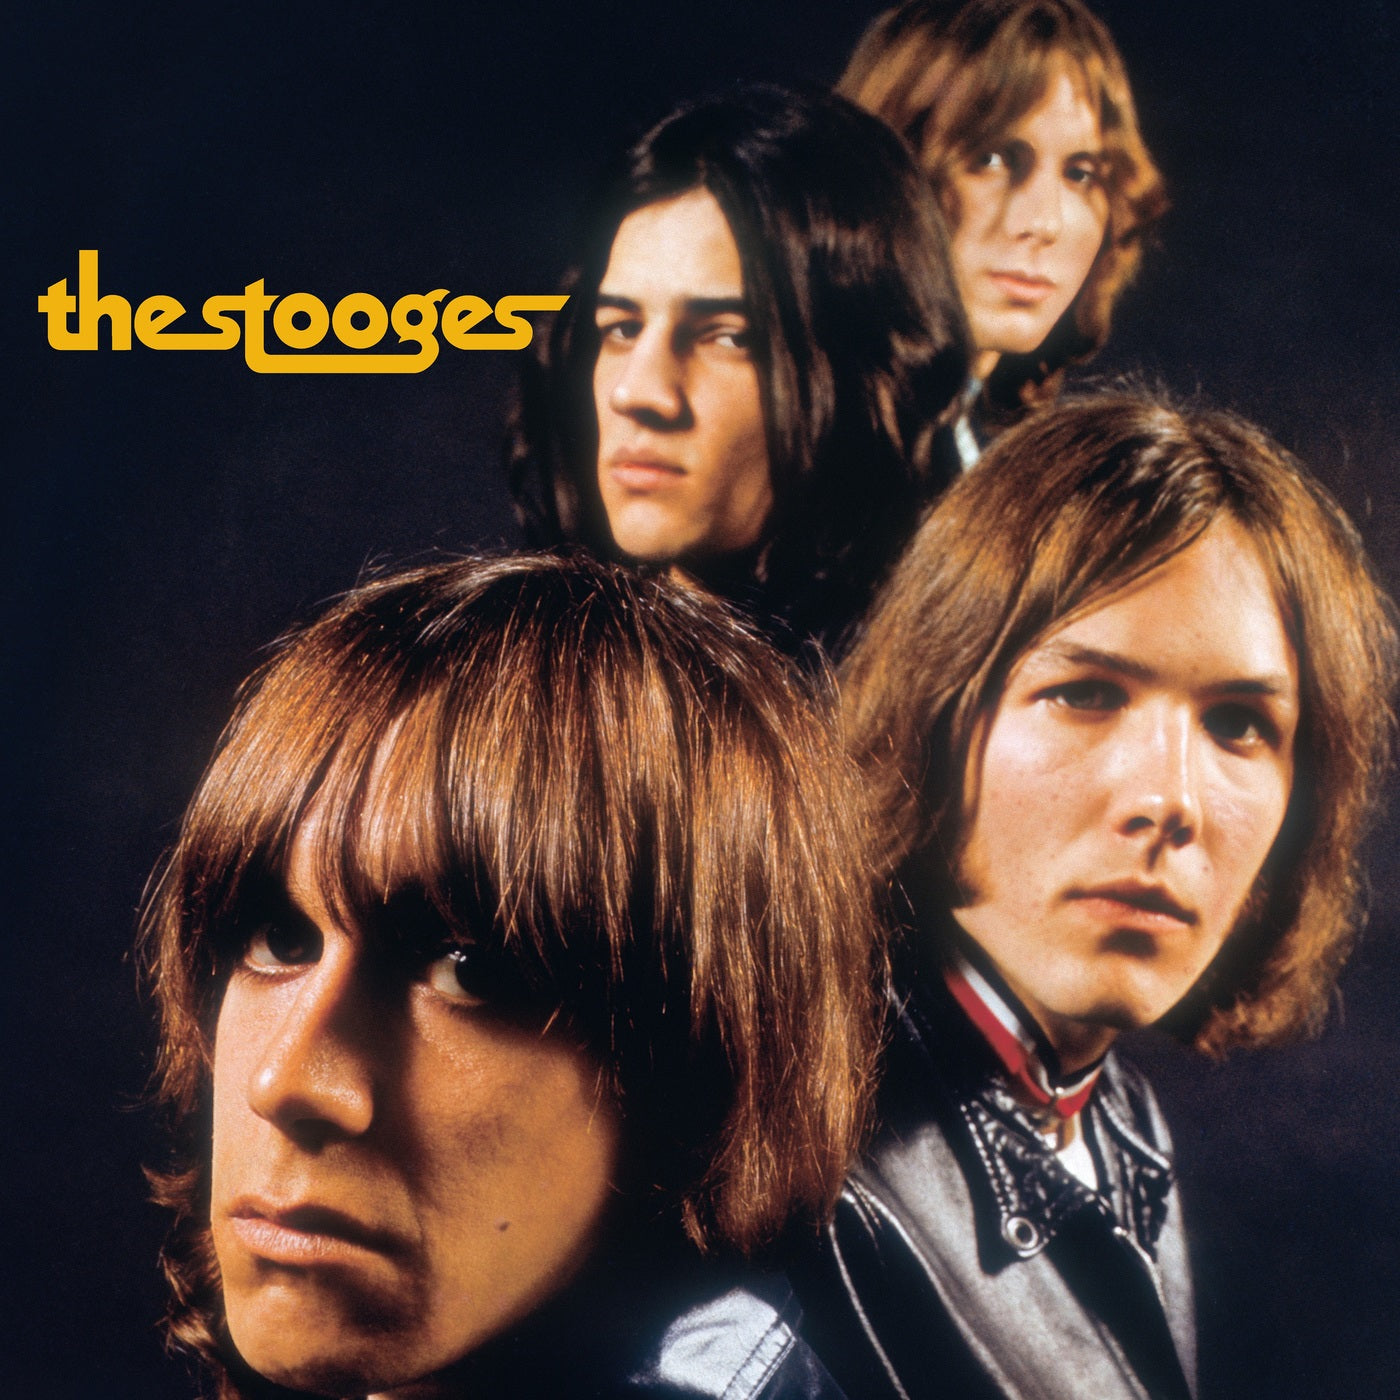 THE STOOGES - THE STOOGES (U)